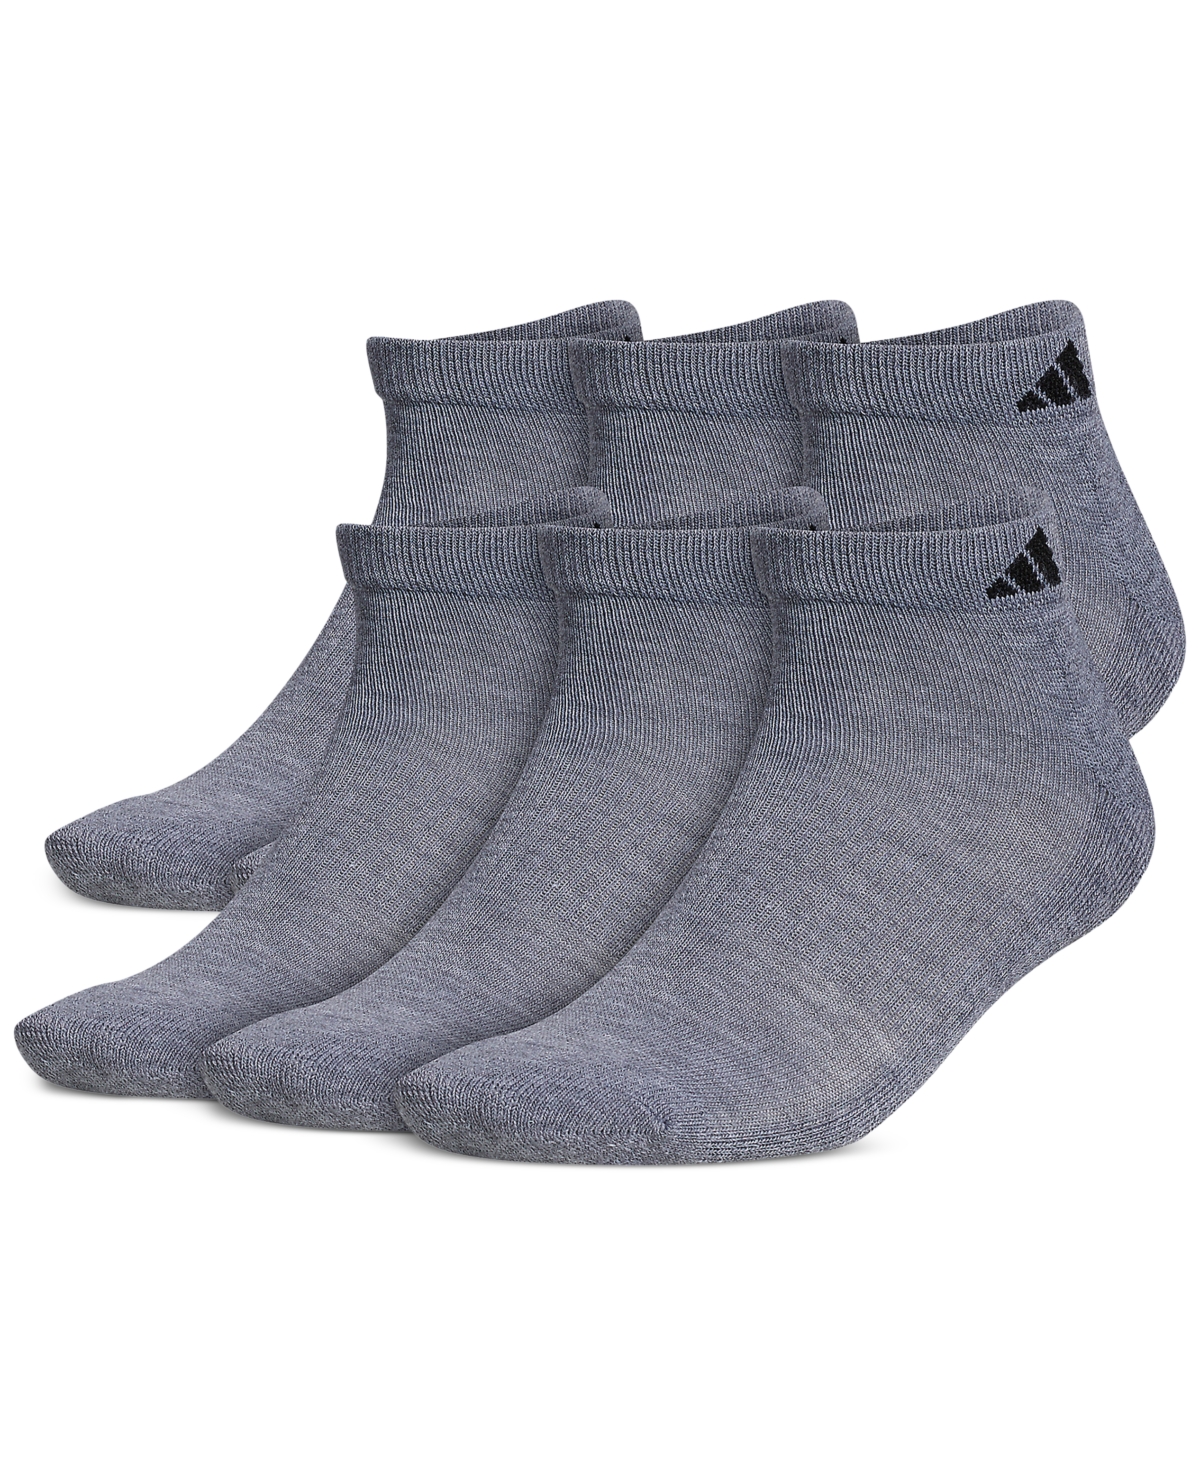 Men's Cushioned Athletic 6-Pack Low Cut Socks - Medium Grey